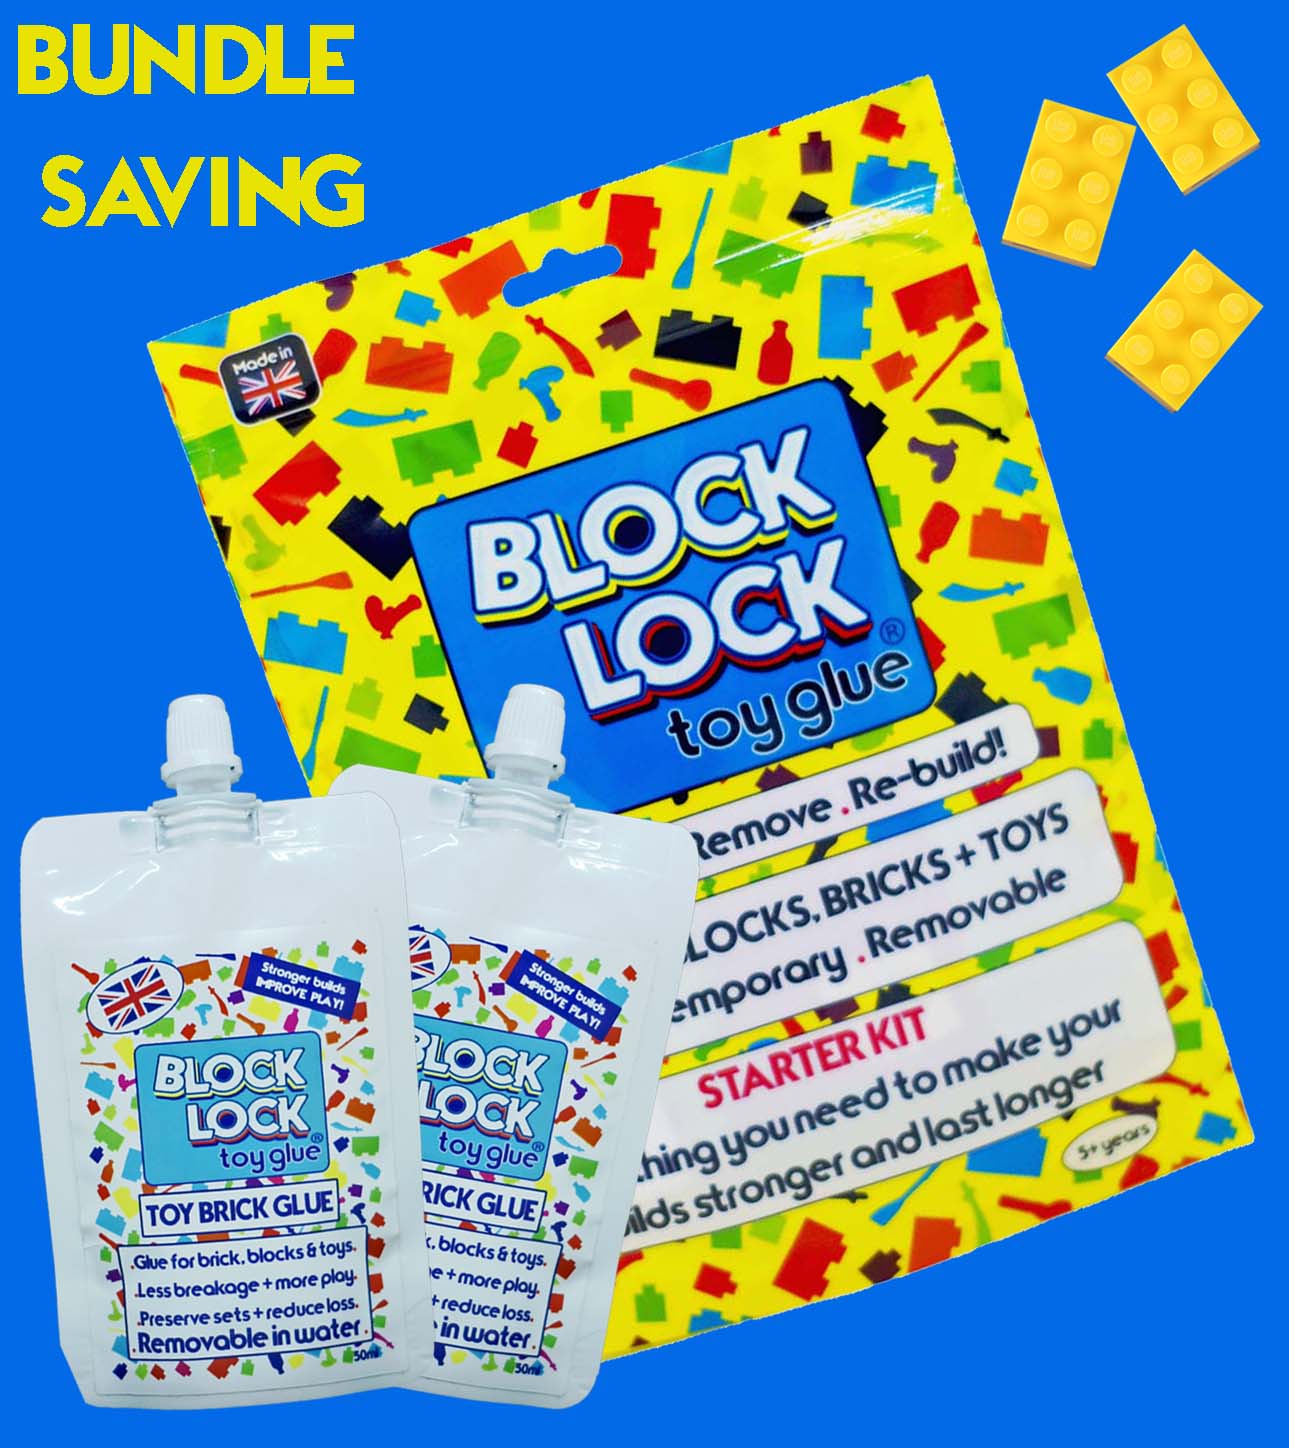 Le-Glue Temporary Glue for LEGO, MegaBlocks and Other Plastic Building  Blocks 